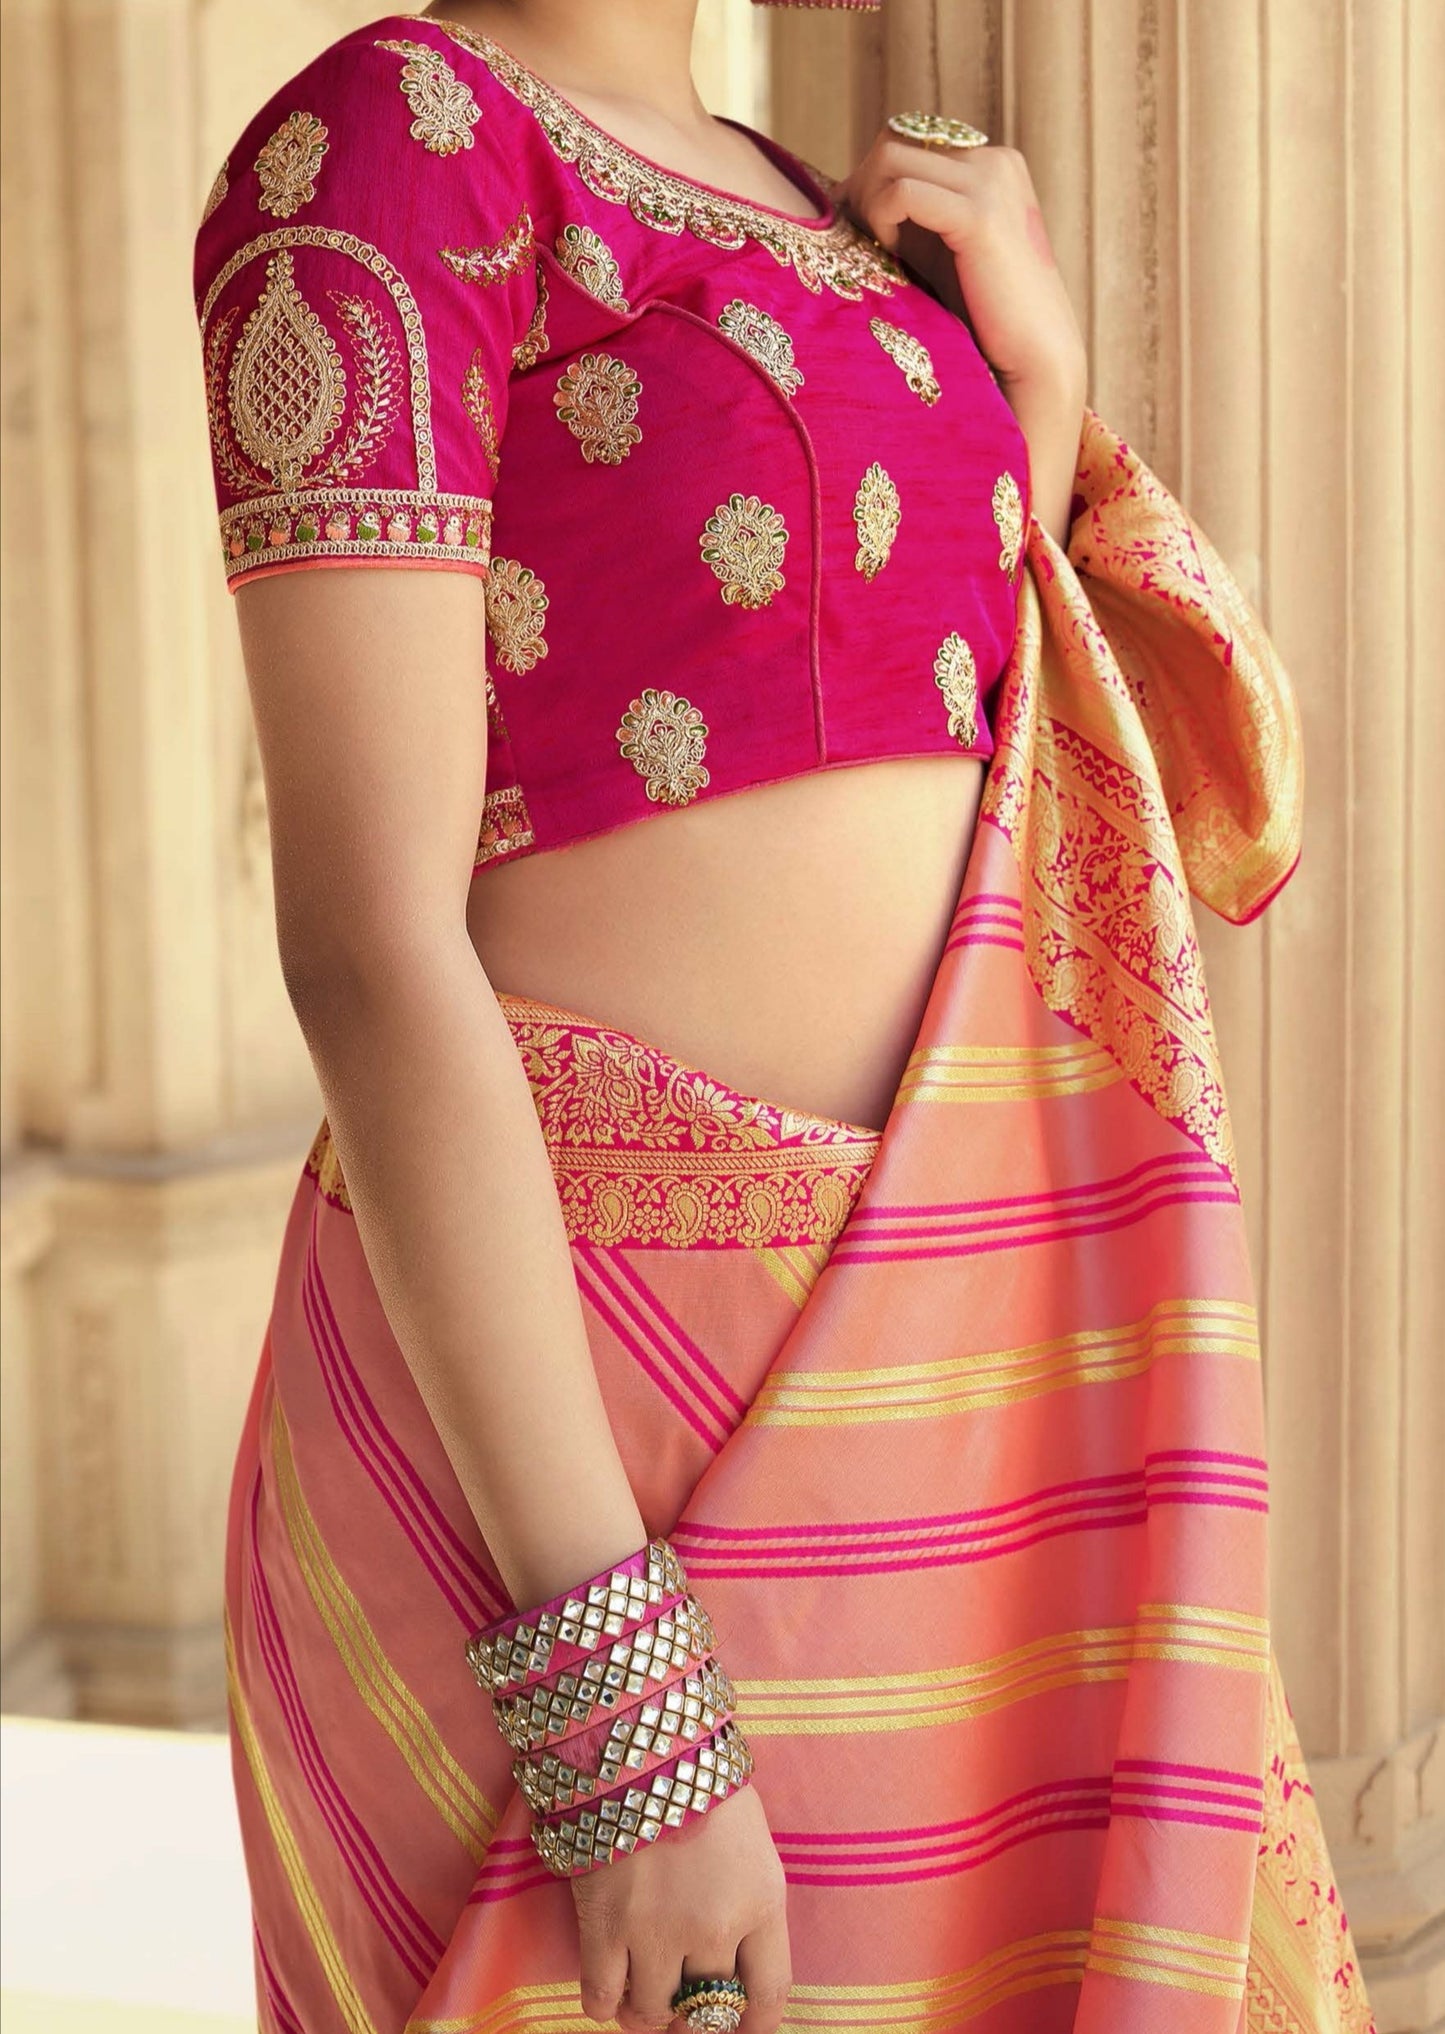 Pure Banarasi Silk Bridal Saree (Peach & Pink)